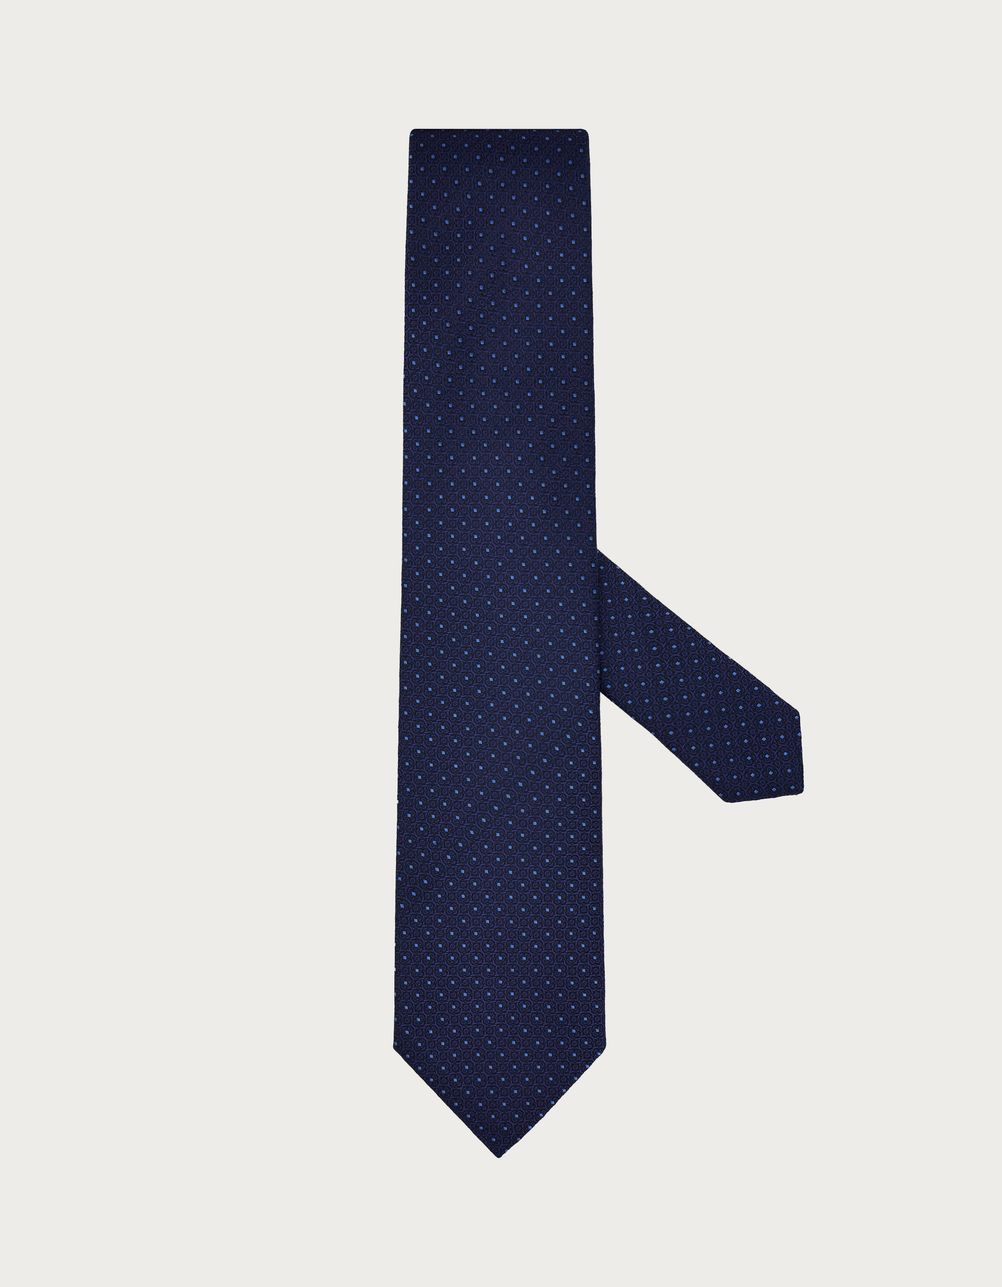 Cravate en soie bleu denim